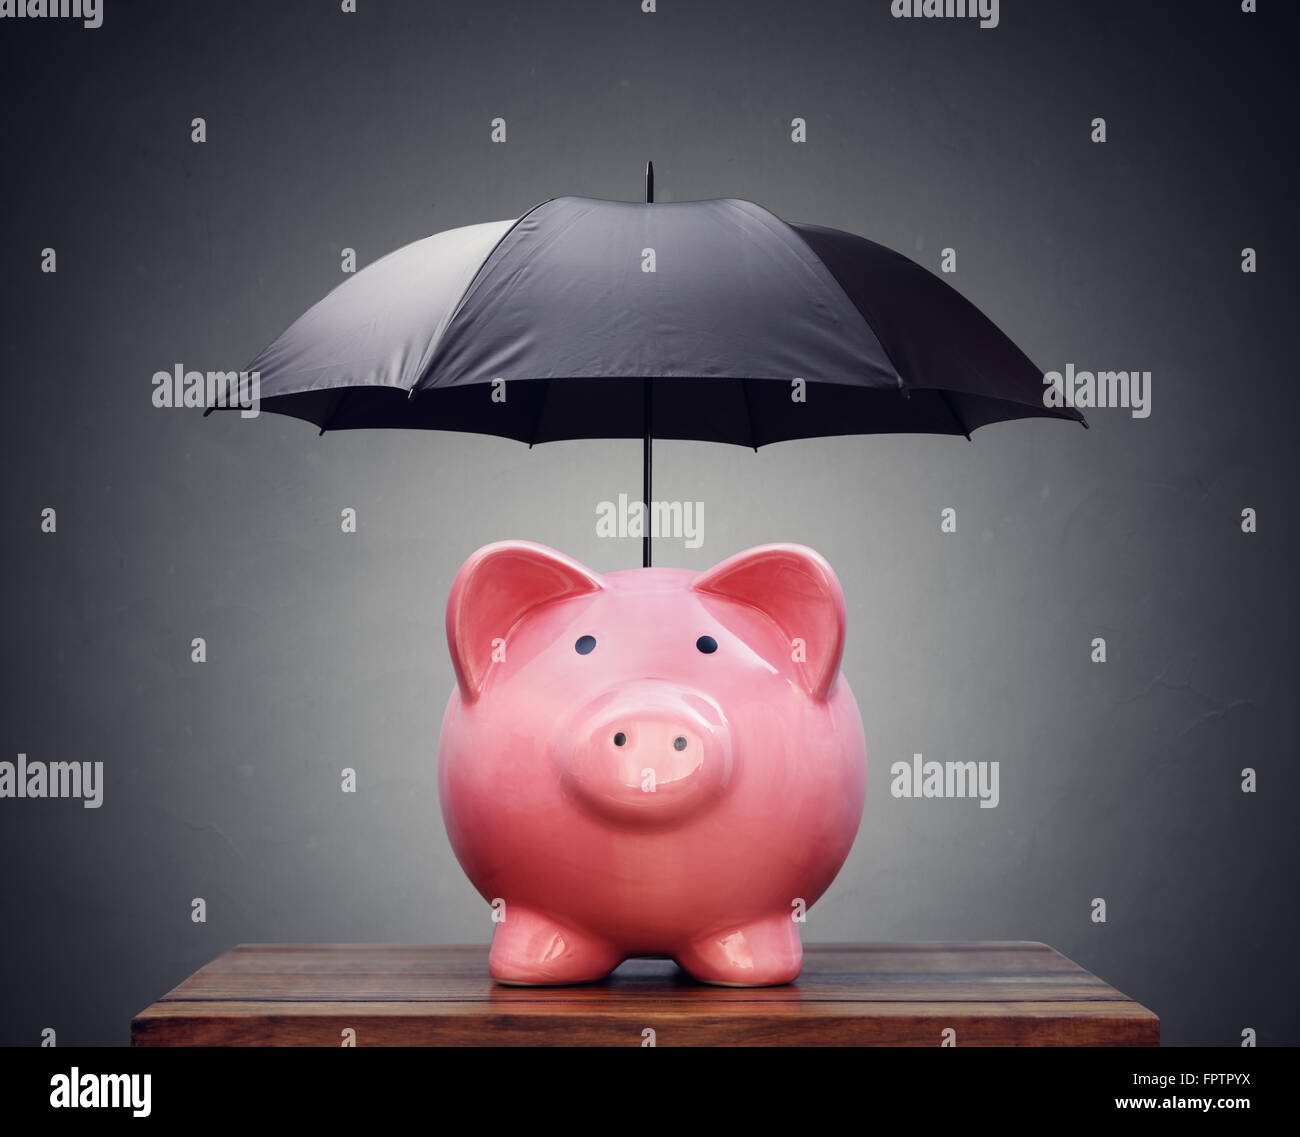 Piggy bank with umbrella Stock Photo